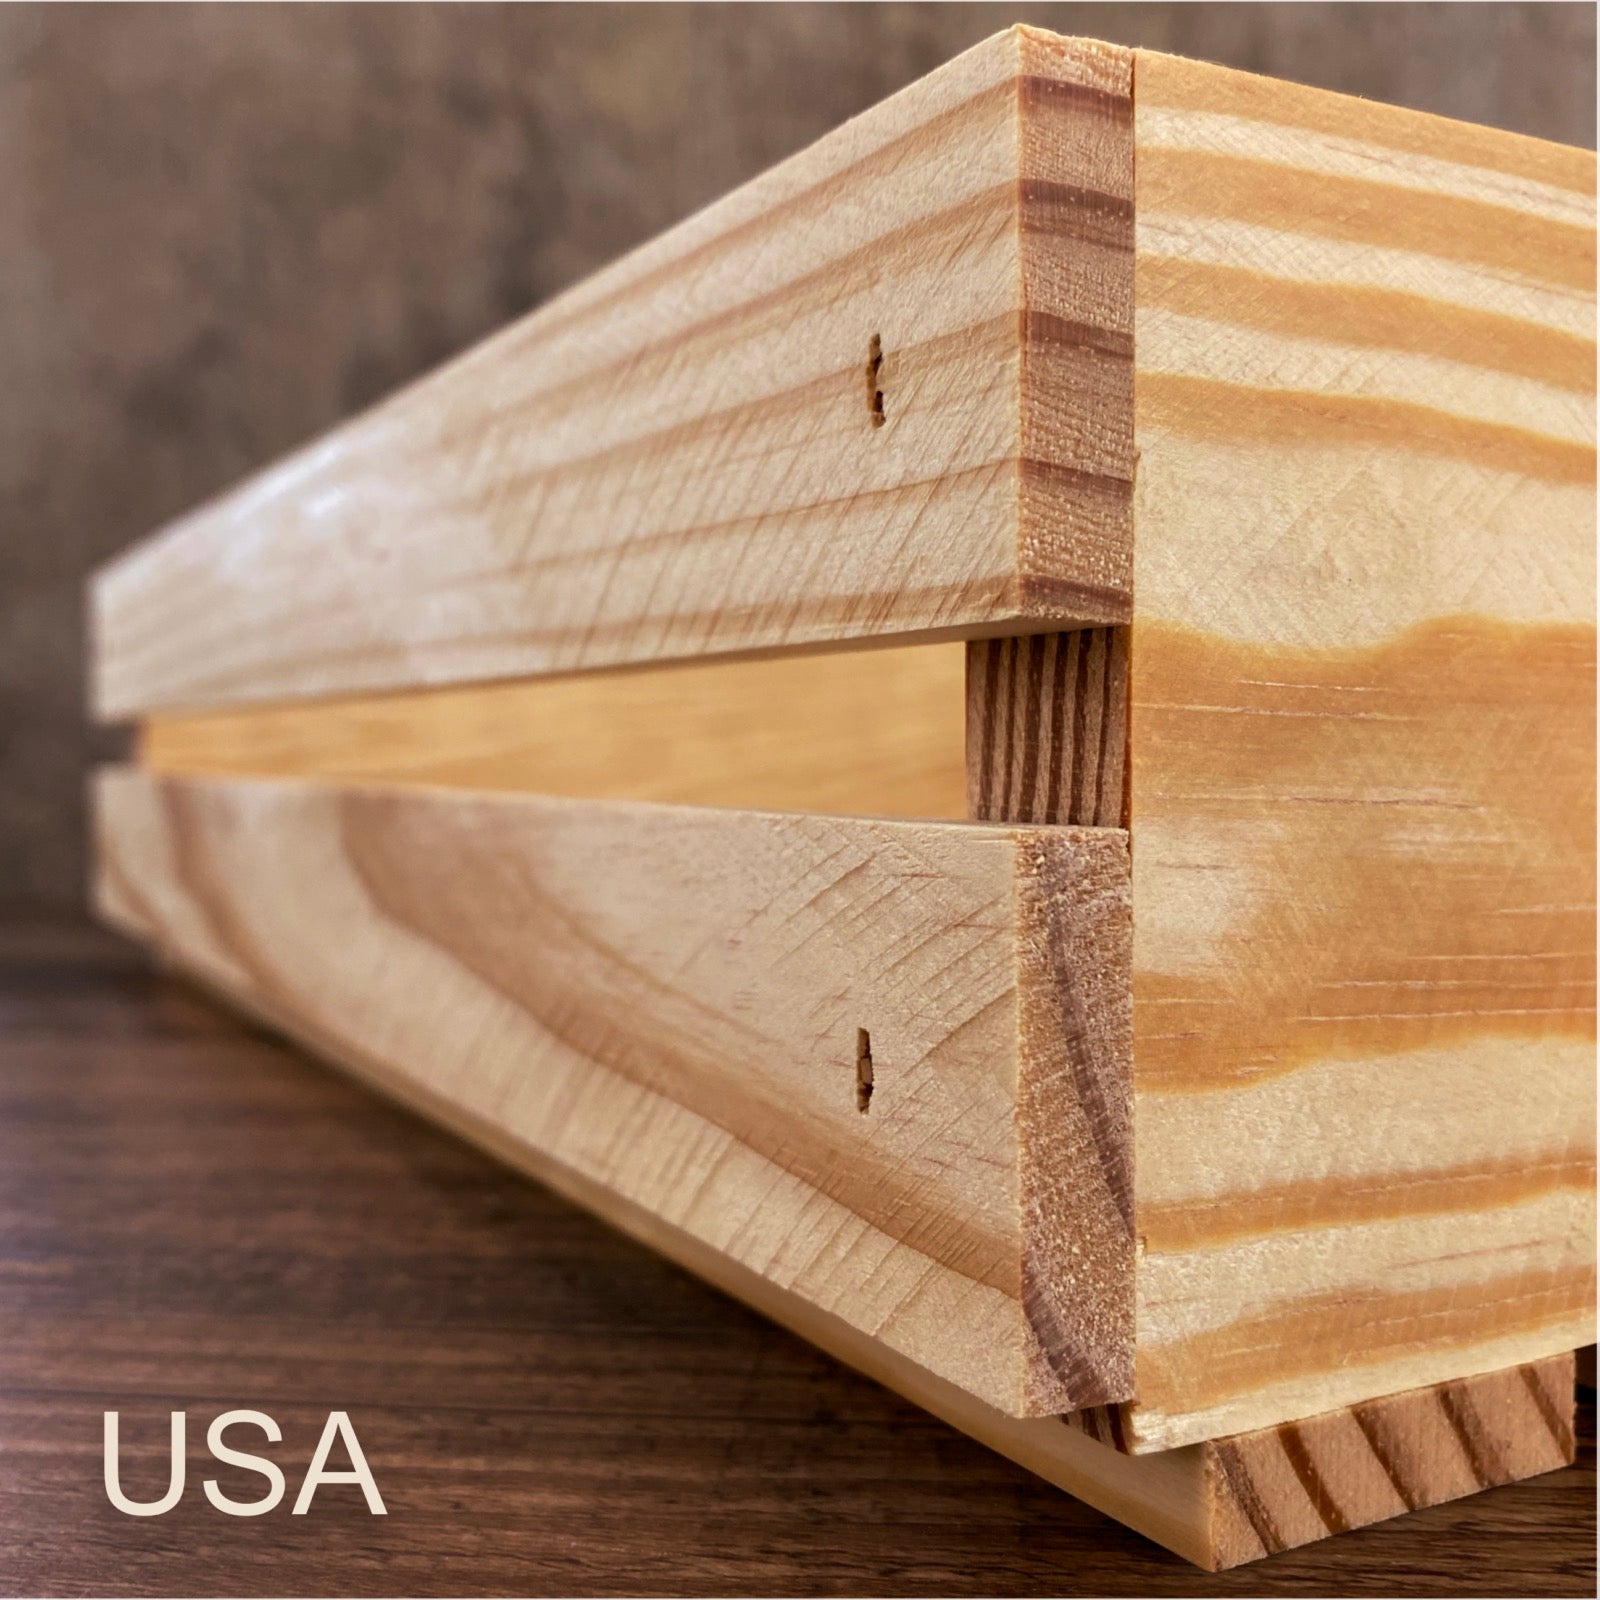 Carpenter Core crates are made in the USA